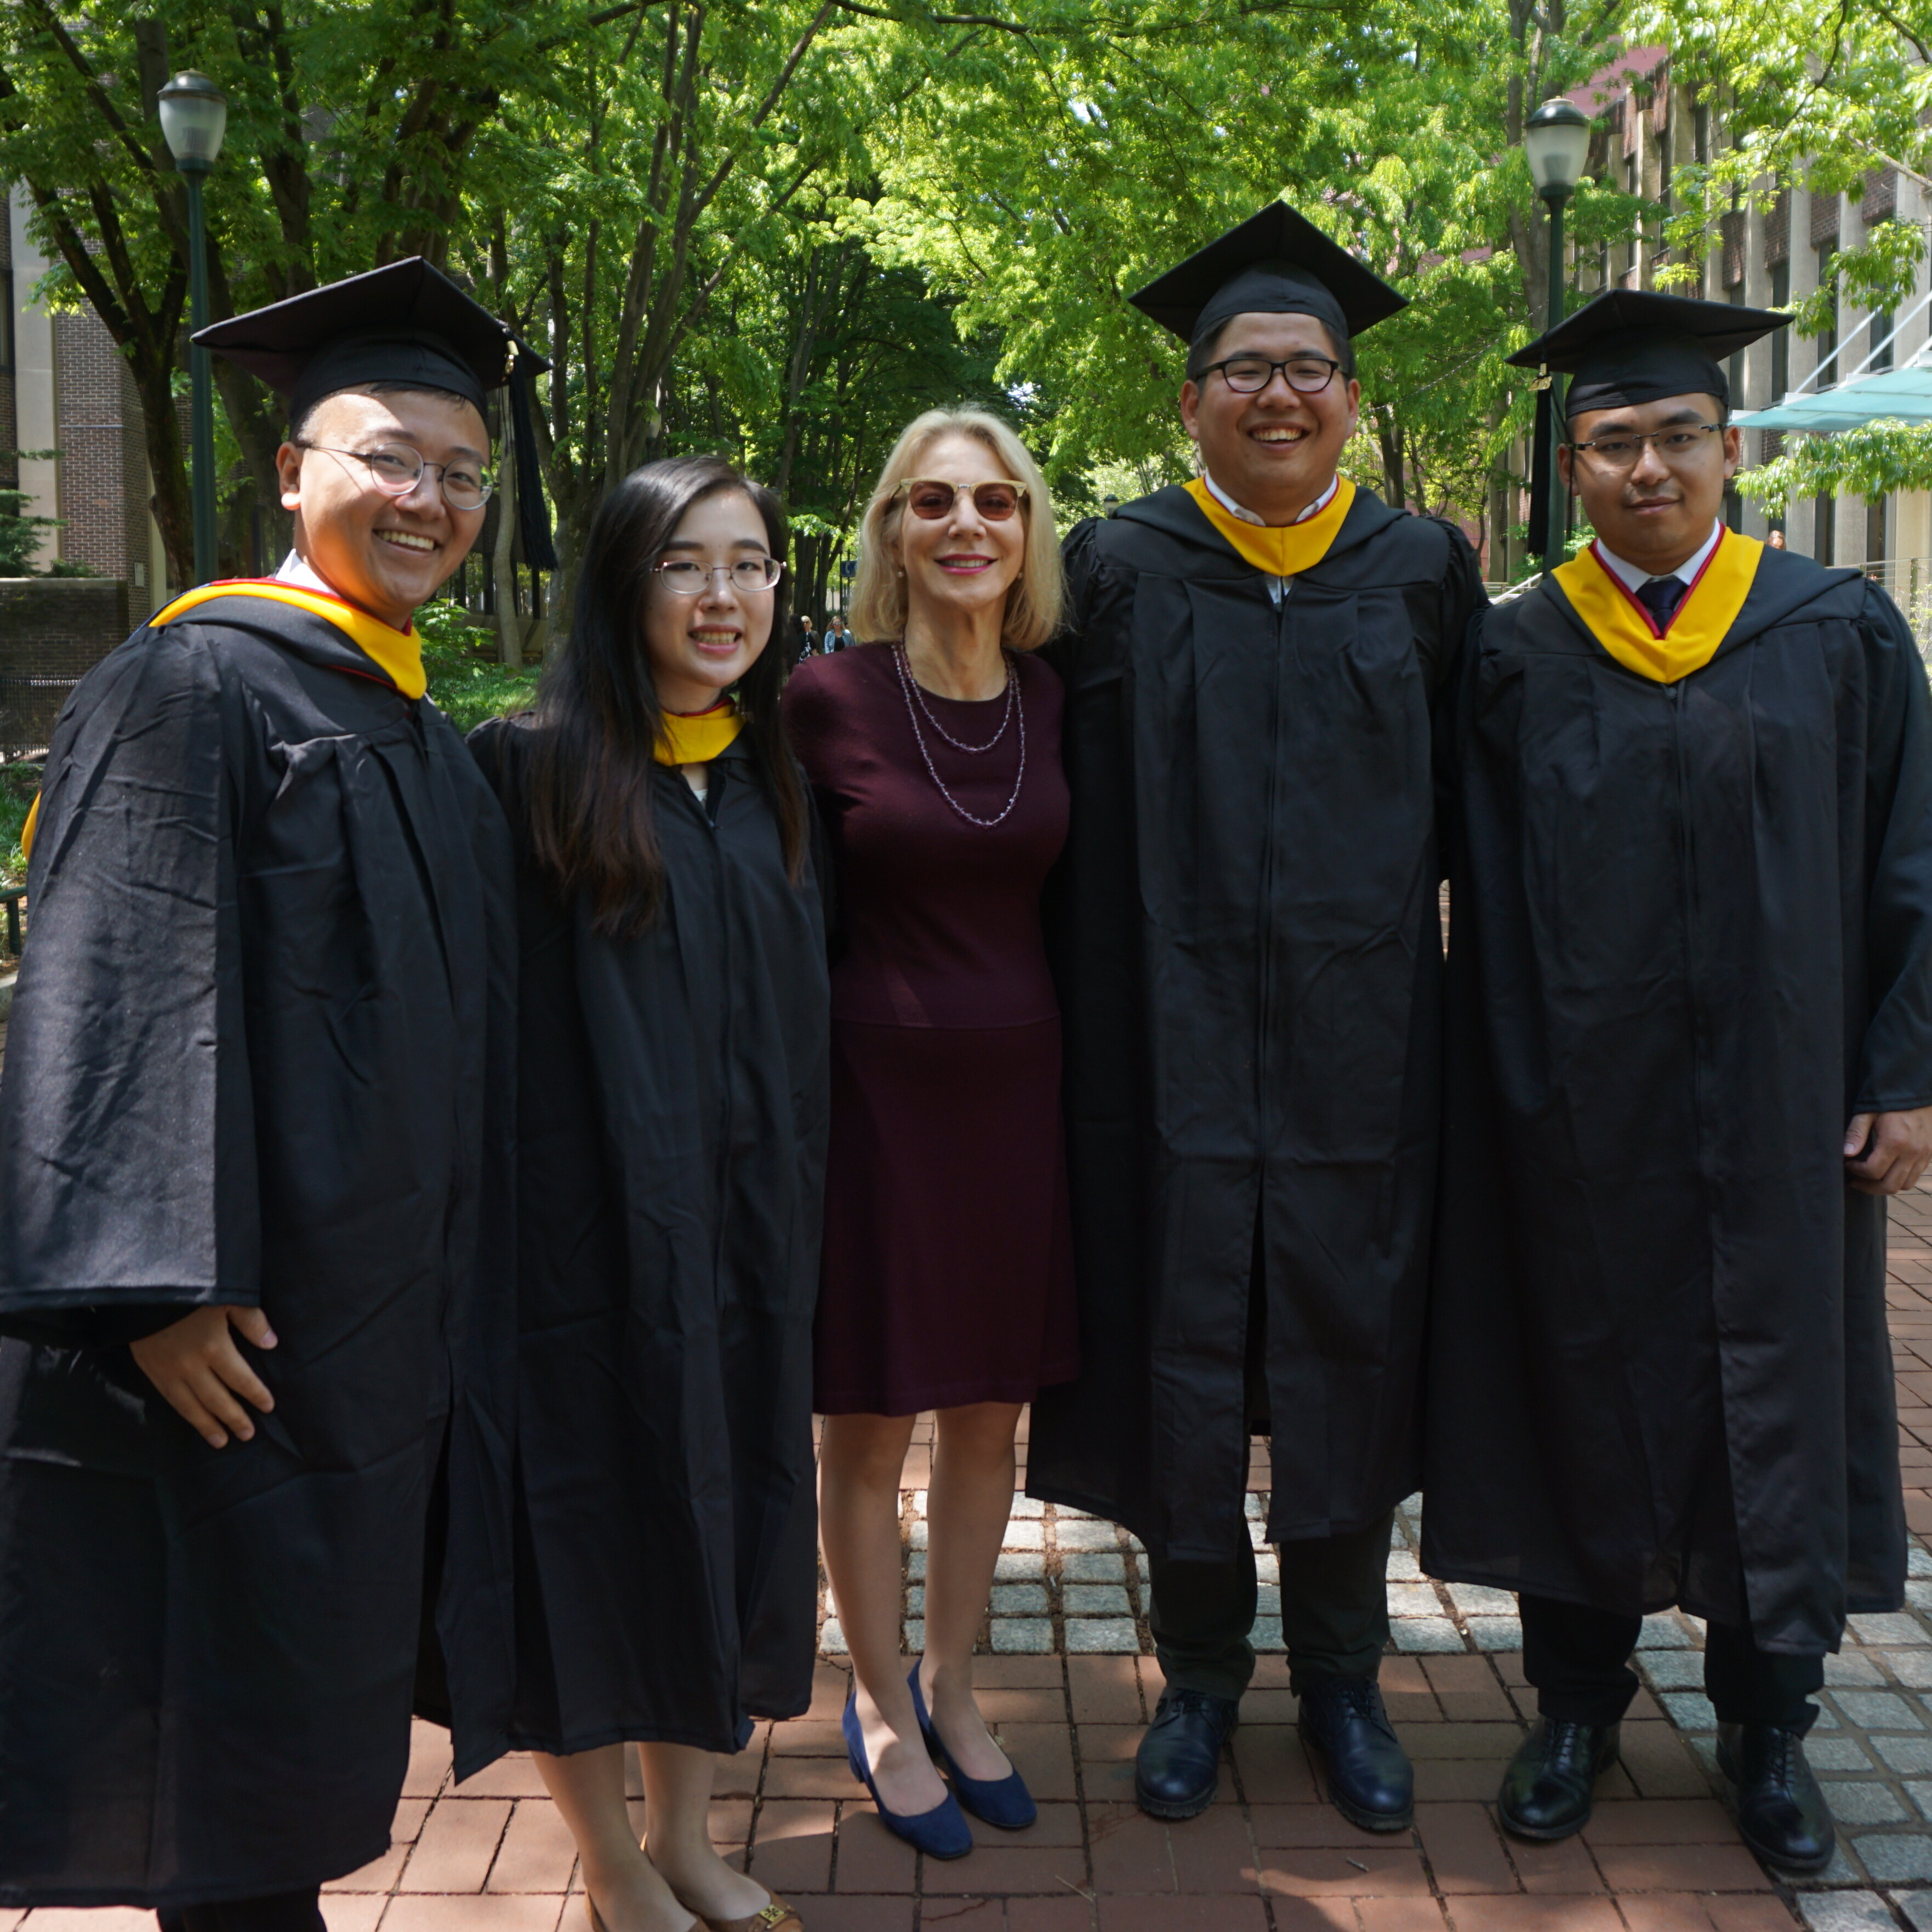 New Penn Graduates on Campus